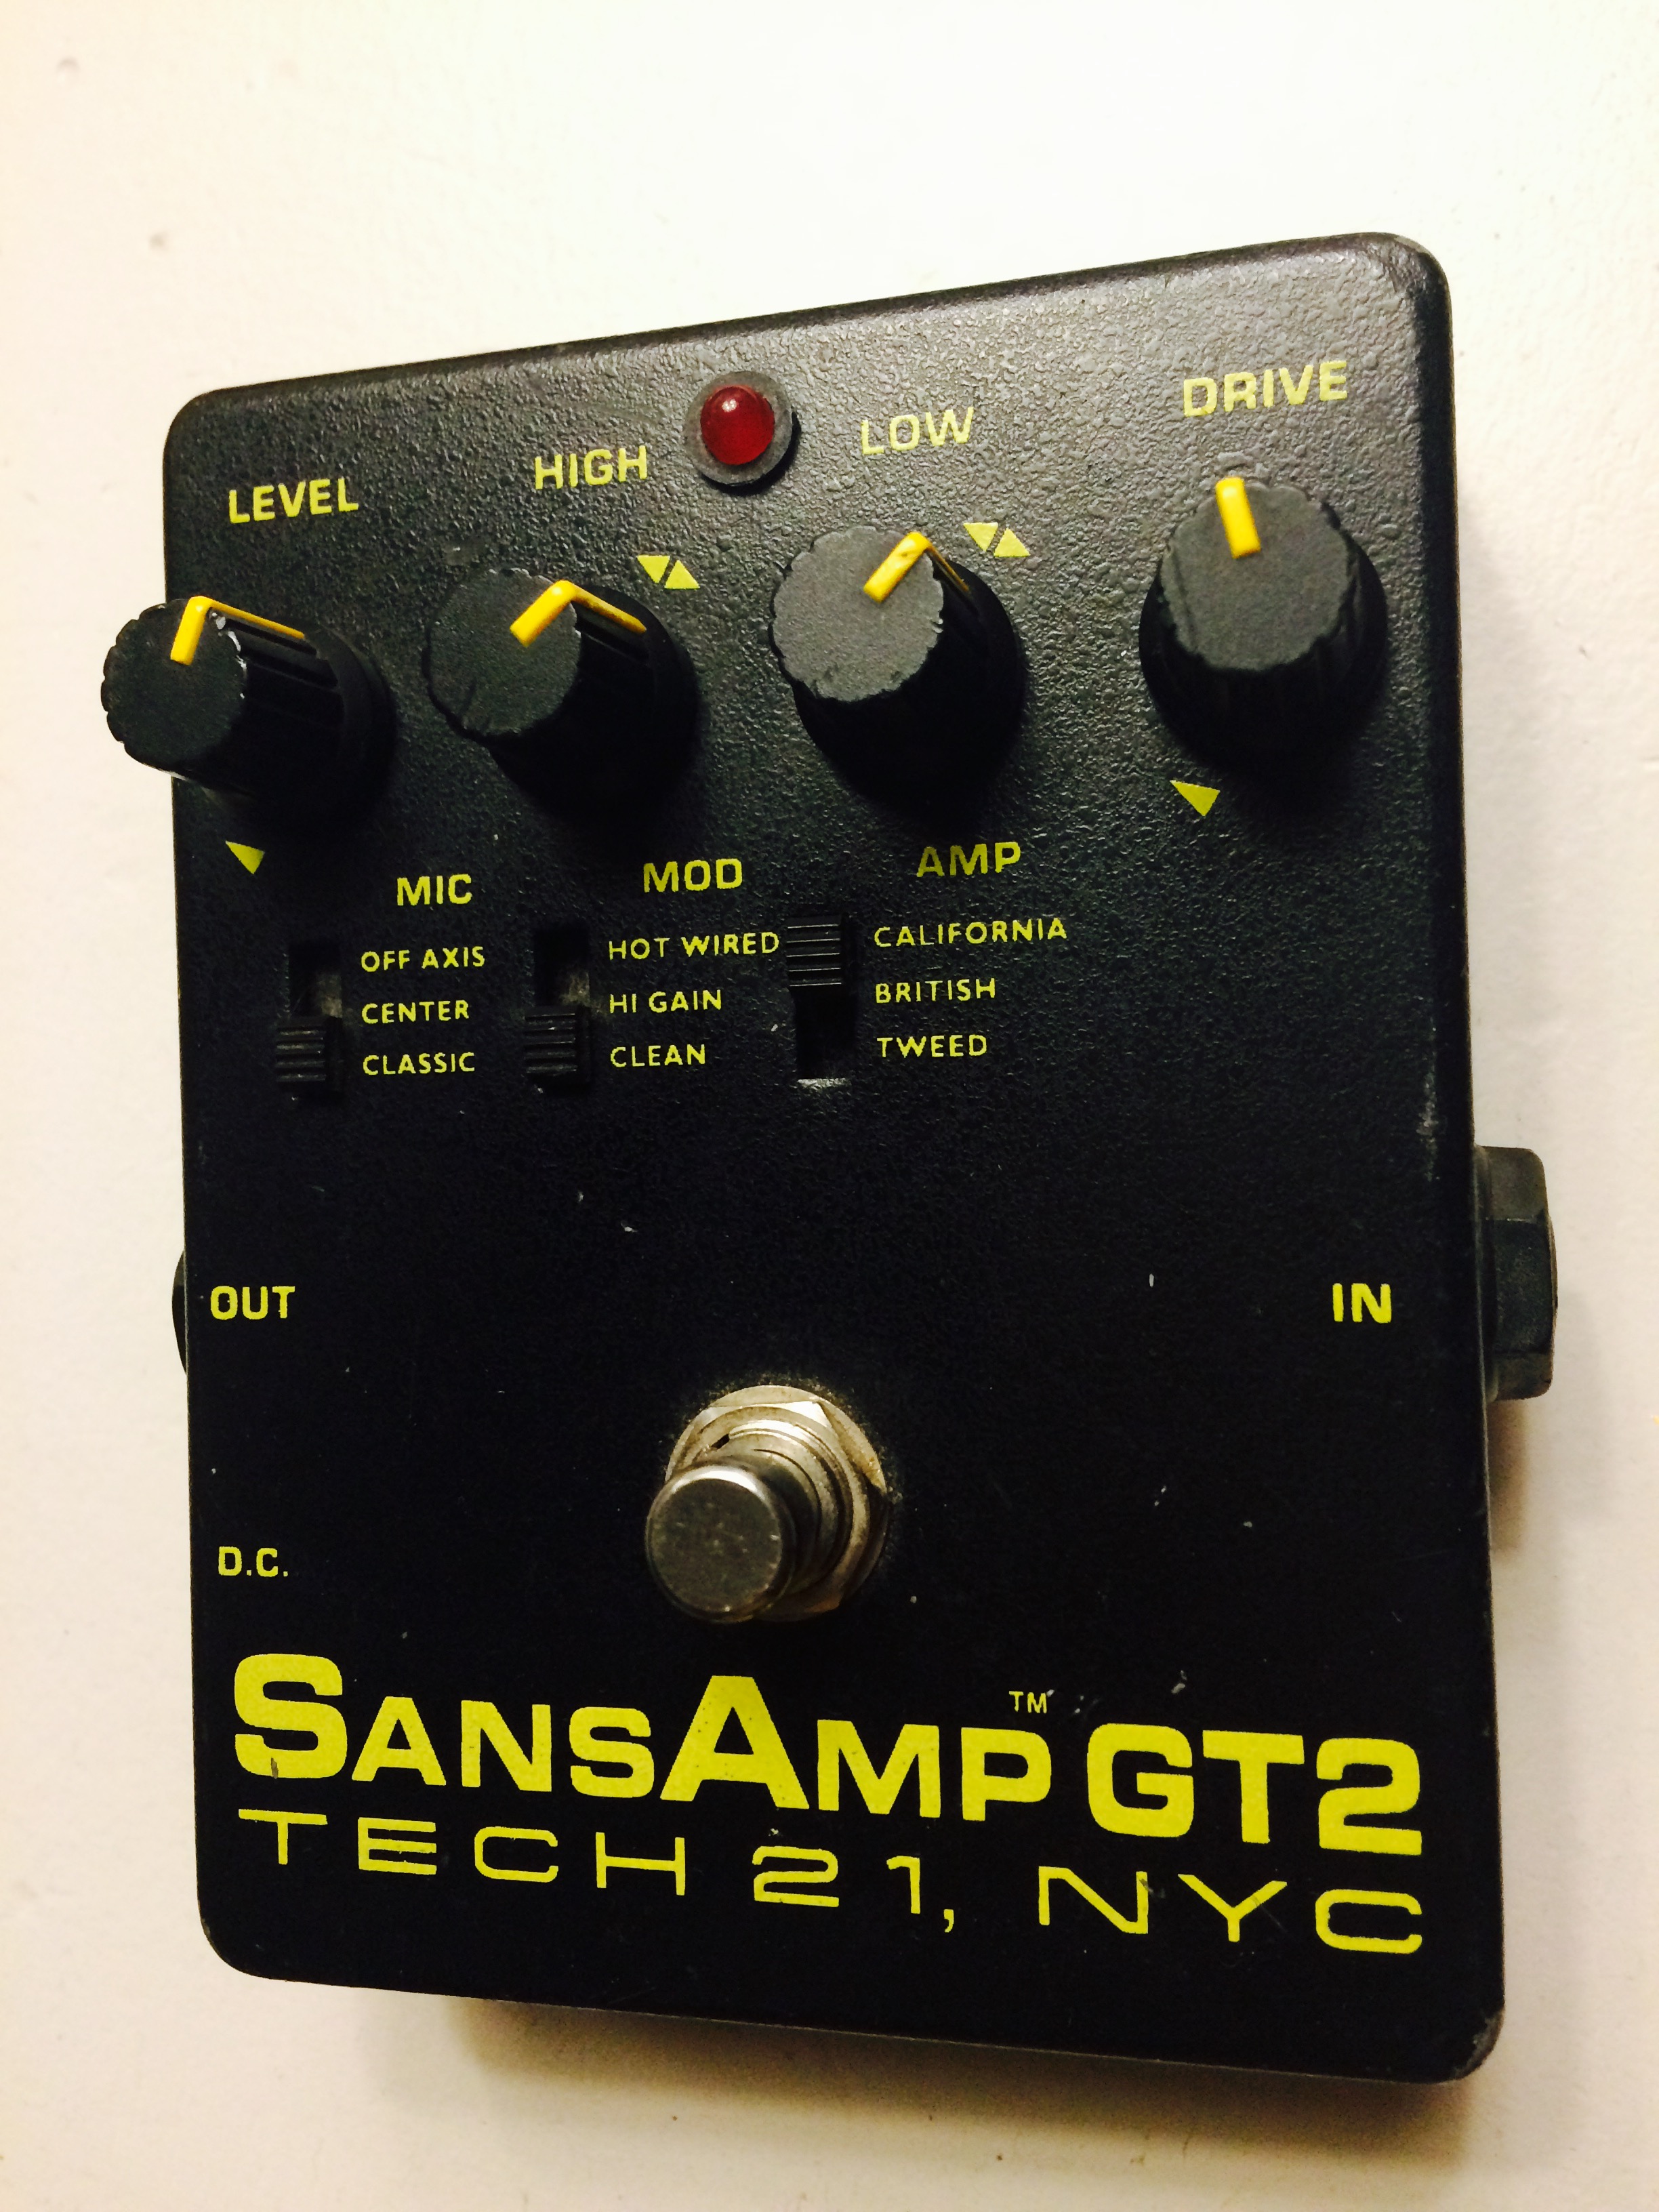 SANSAMP GT2 - Tech 21 SansAmp GT2 - Audiofanzine